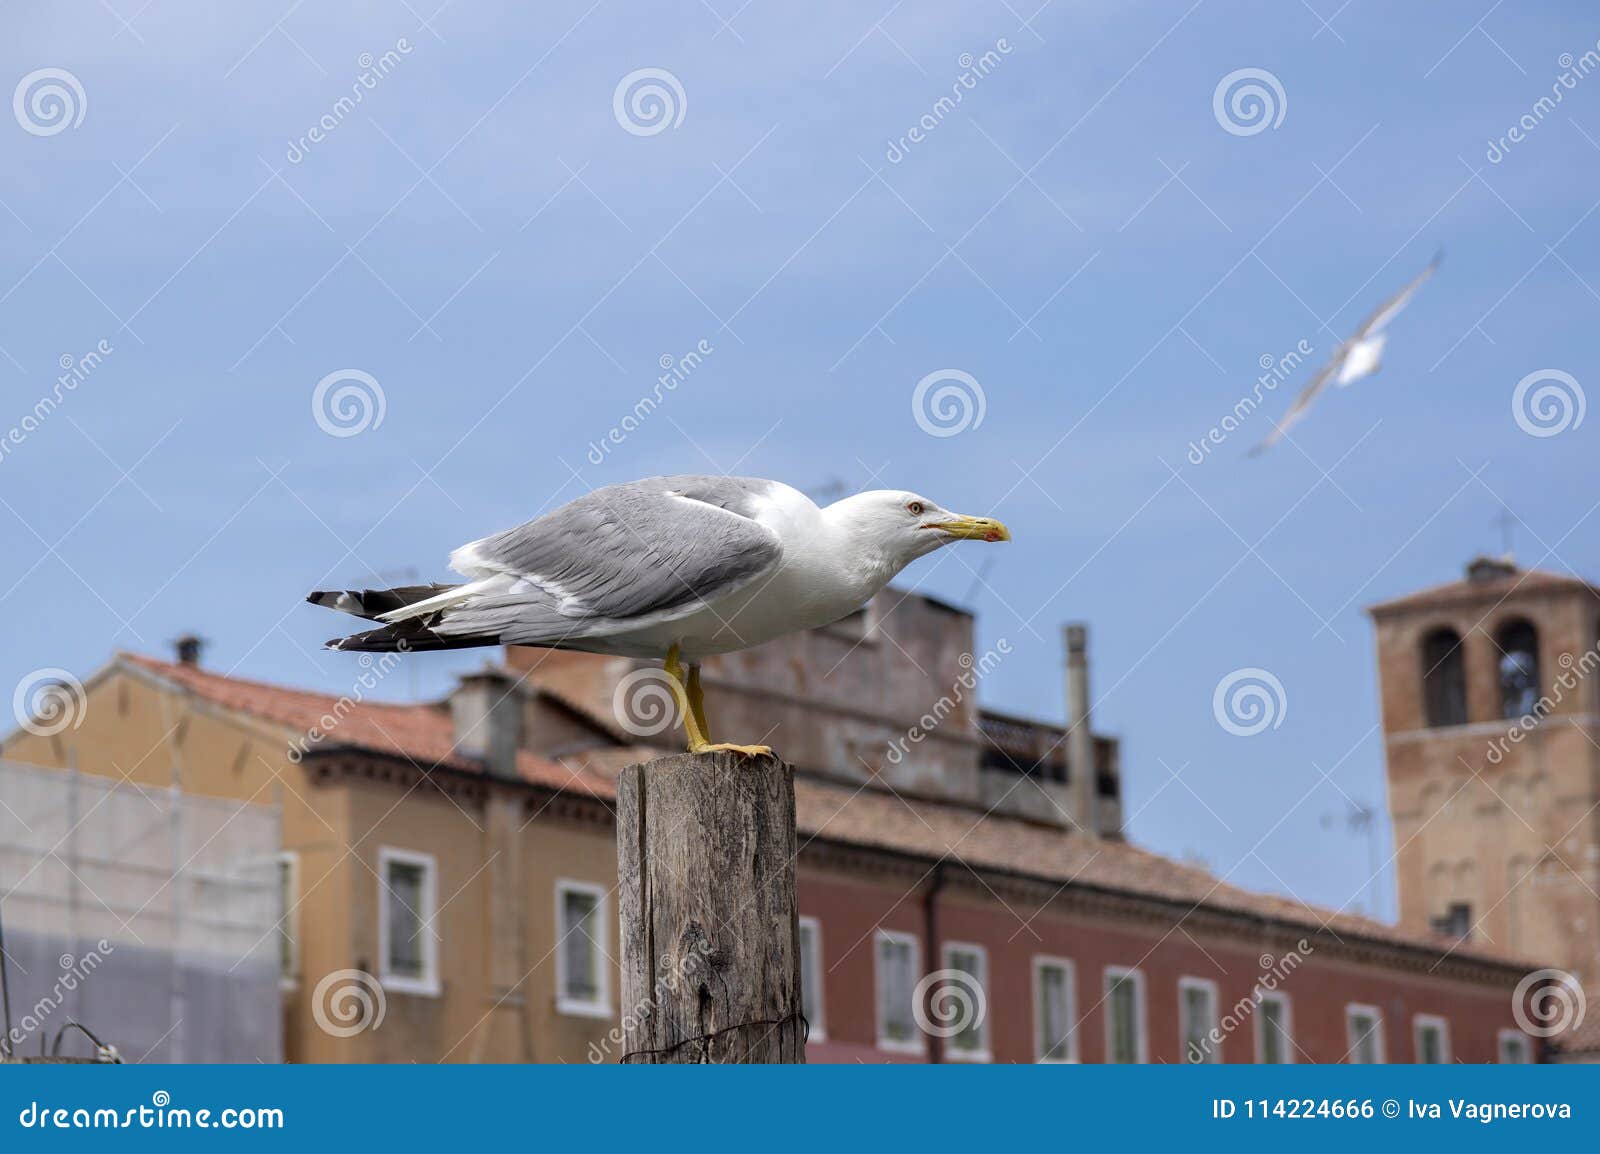 larus michahellis, yellow-legged gull on bricole in italian town chioggia, starting to fly